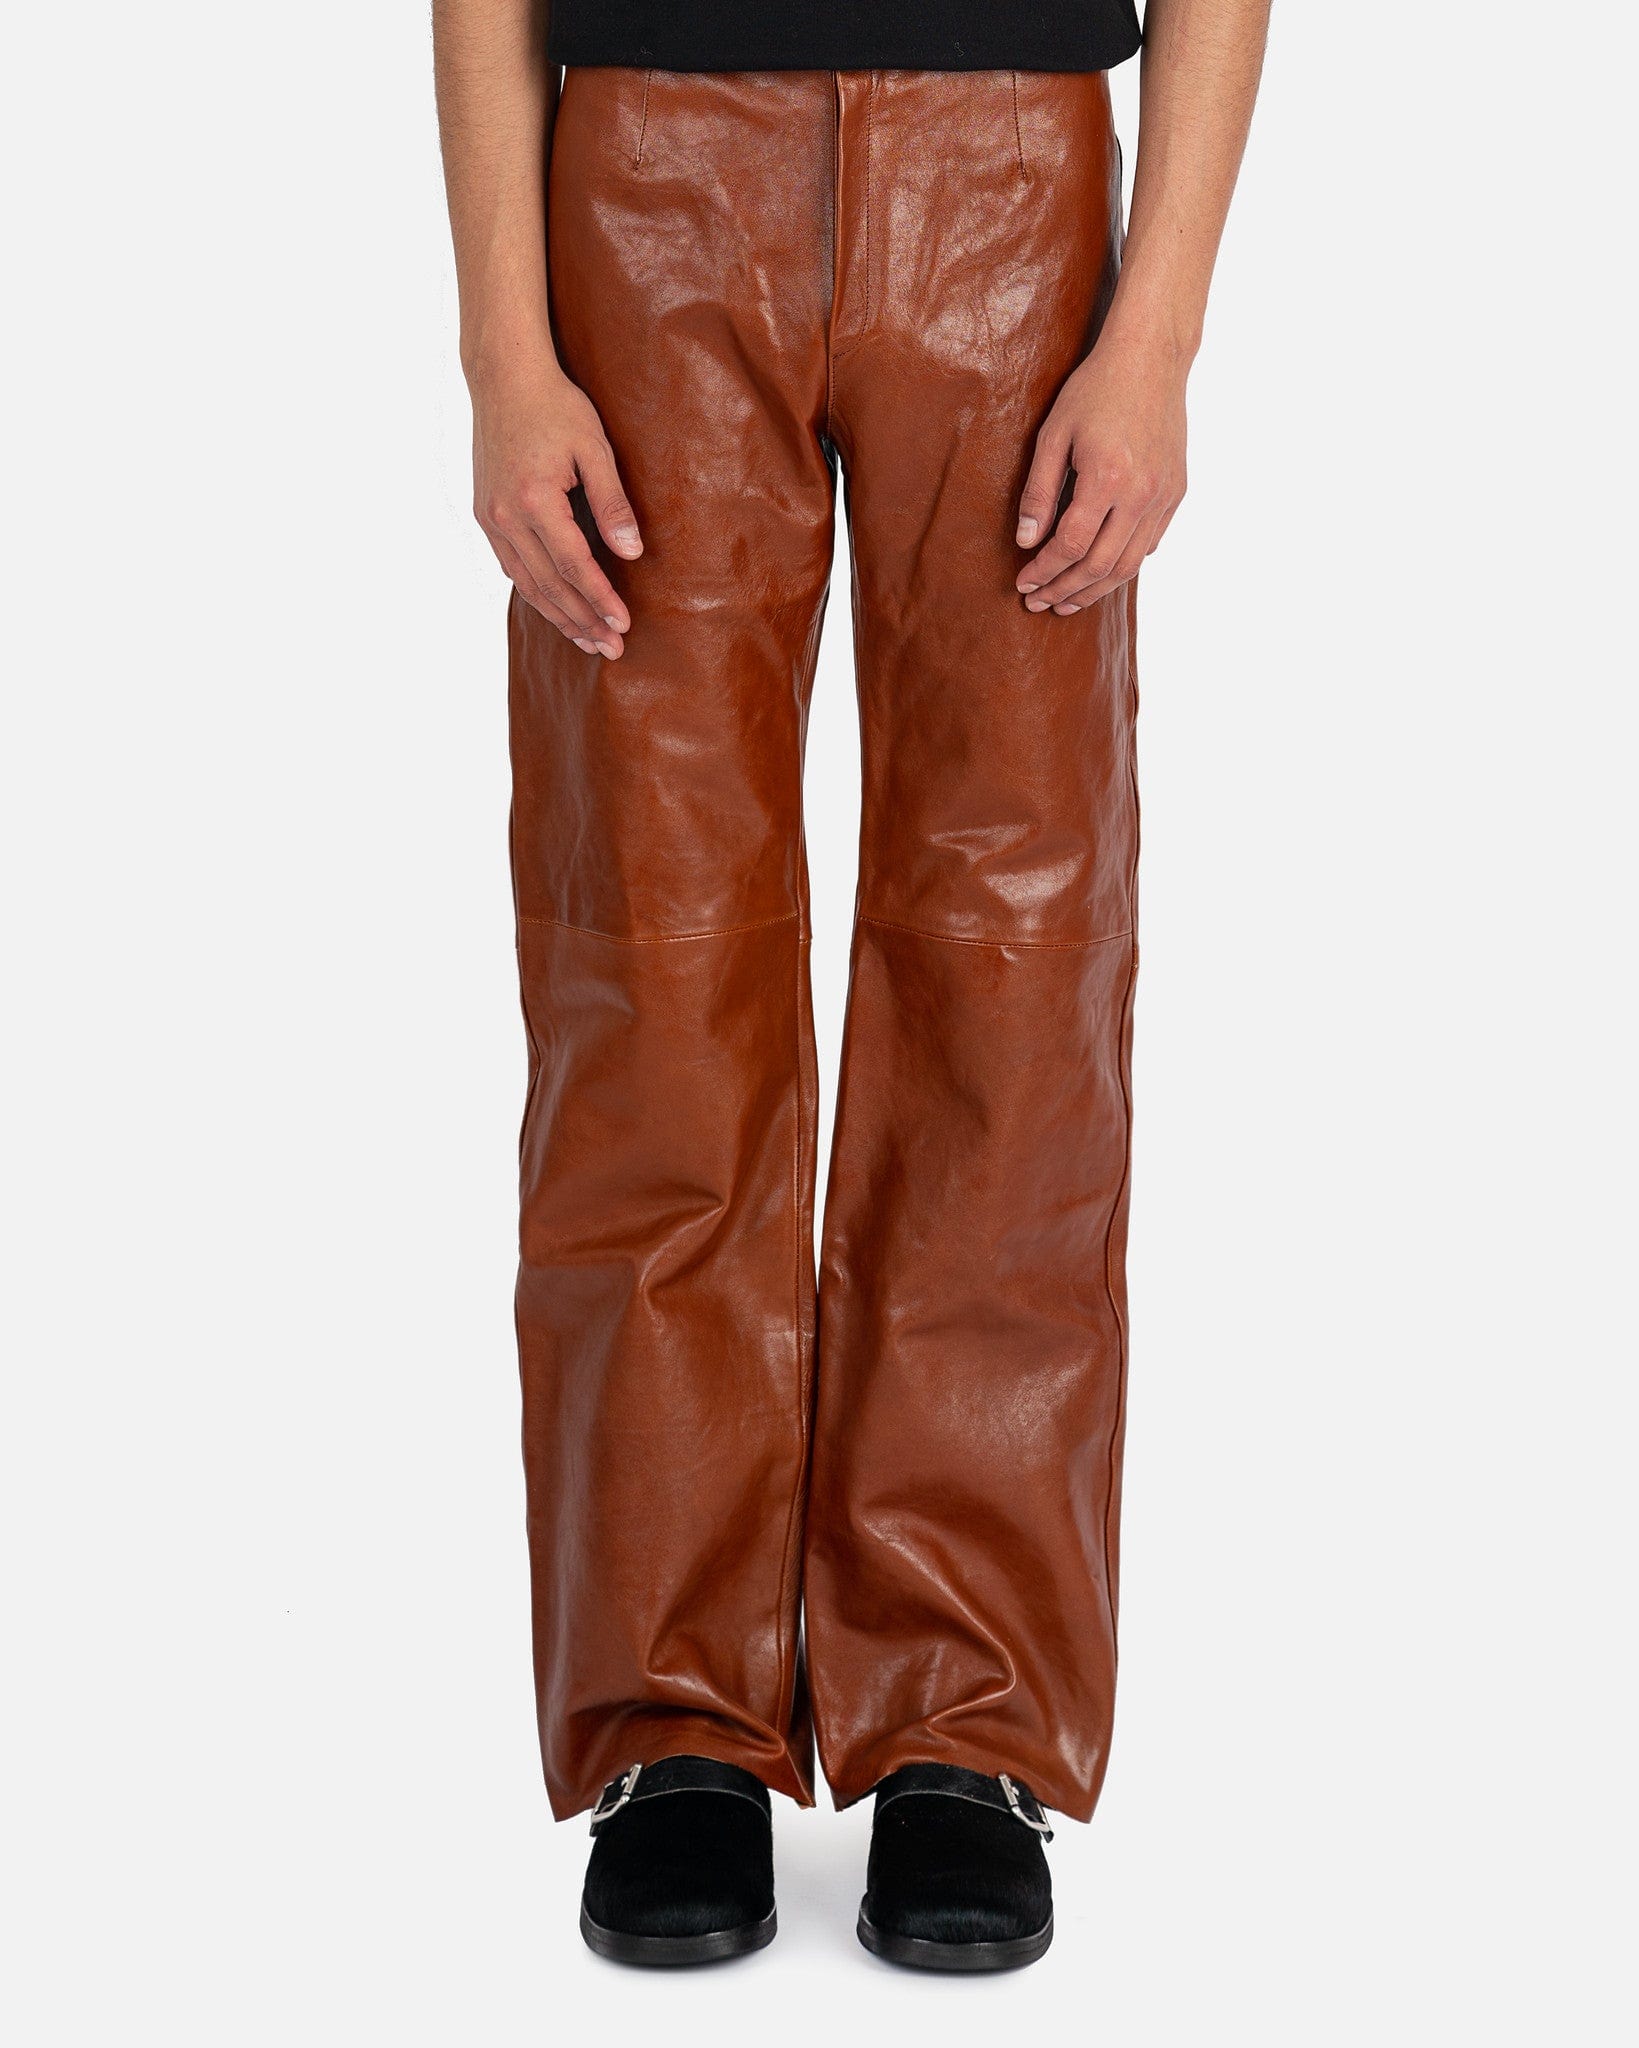 Biker Trousers in Cognac Brown Leather